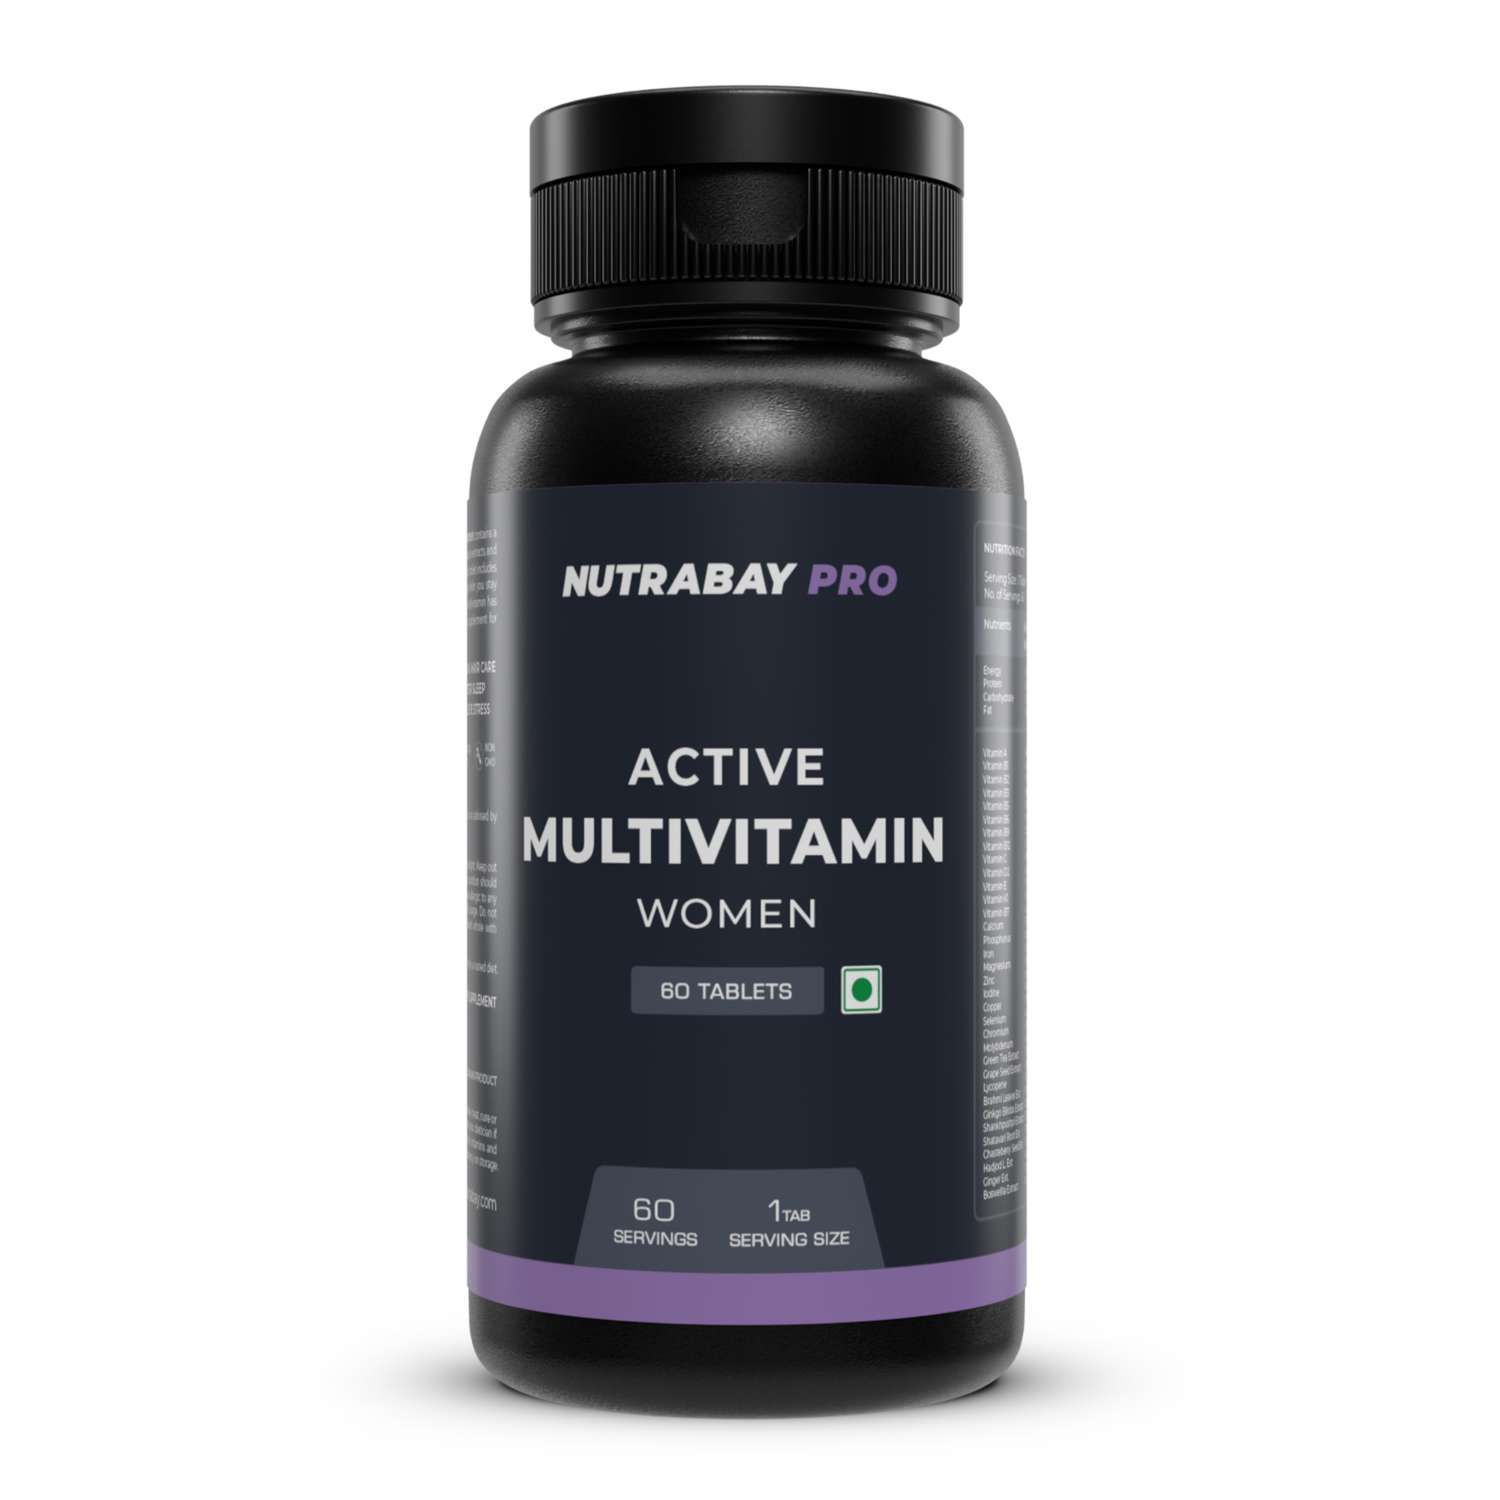 Nutrabay Pro Active Multivitamin for Women Image